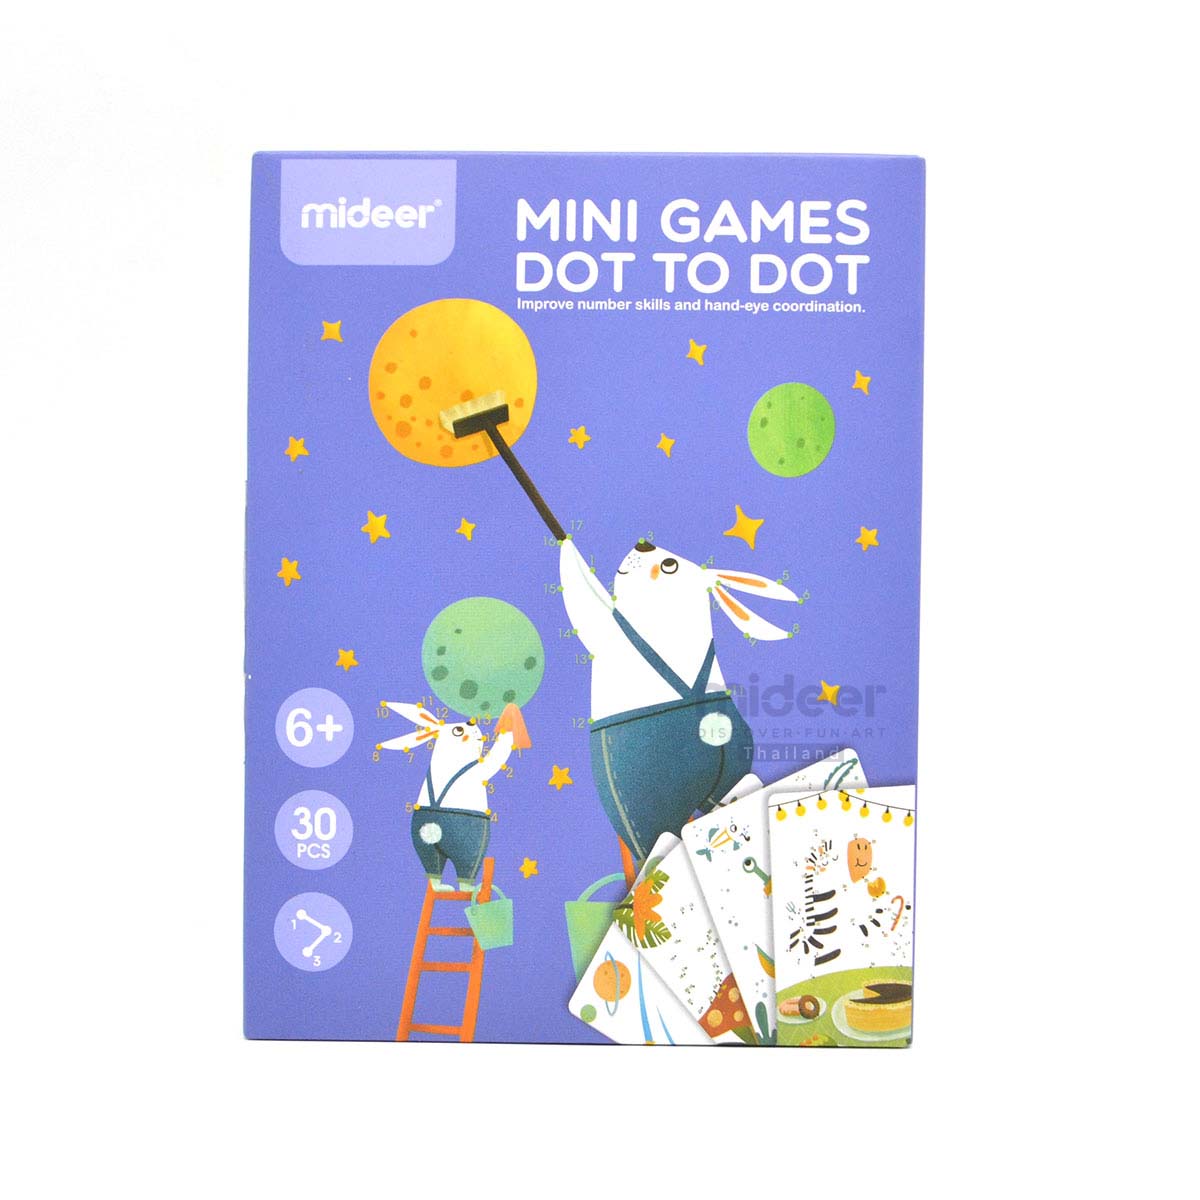 mideer-mini-games-dot-to-dot-mideer-itoso-toy-distributor-new